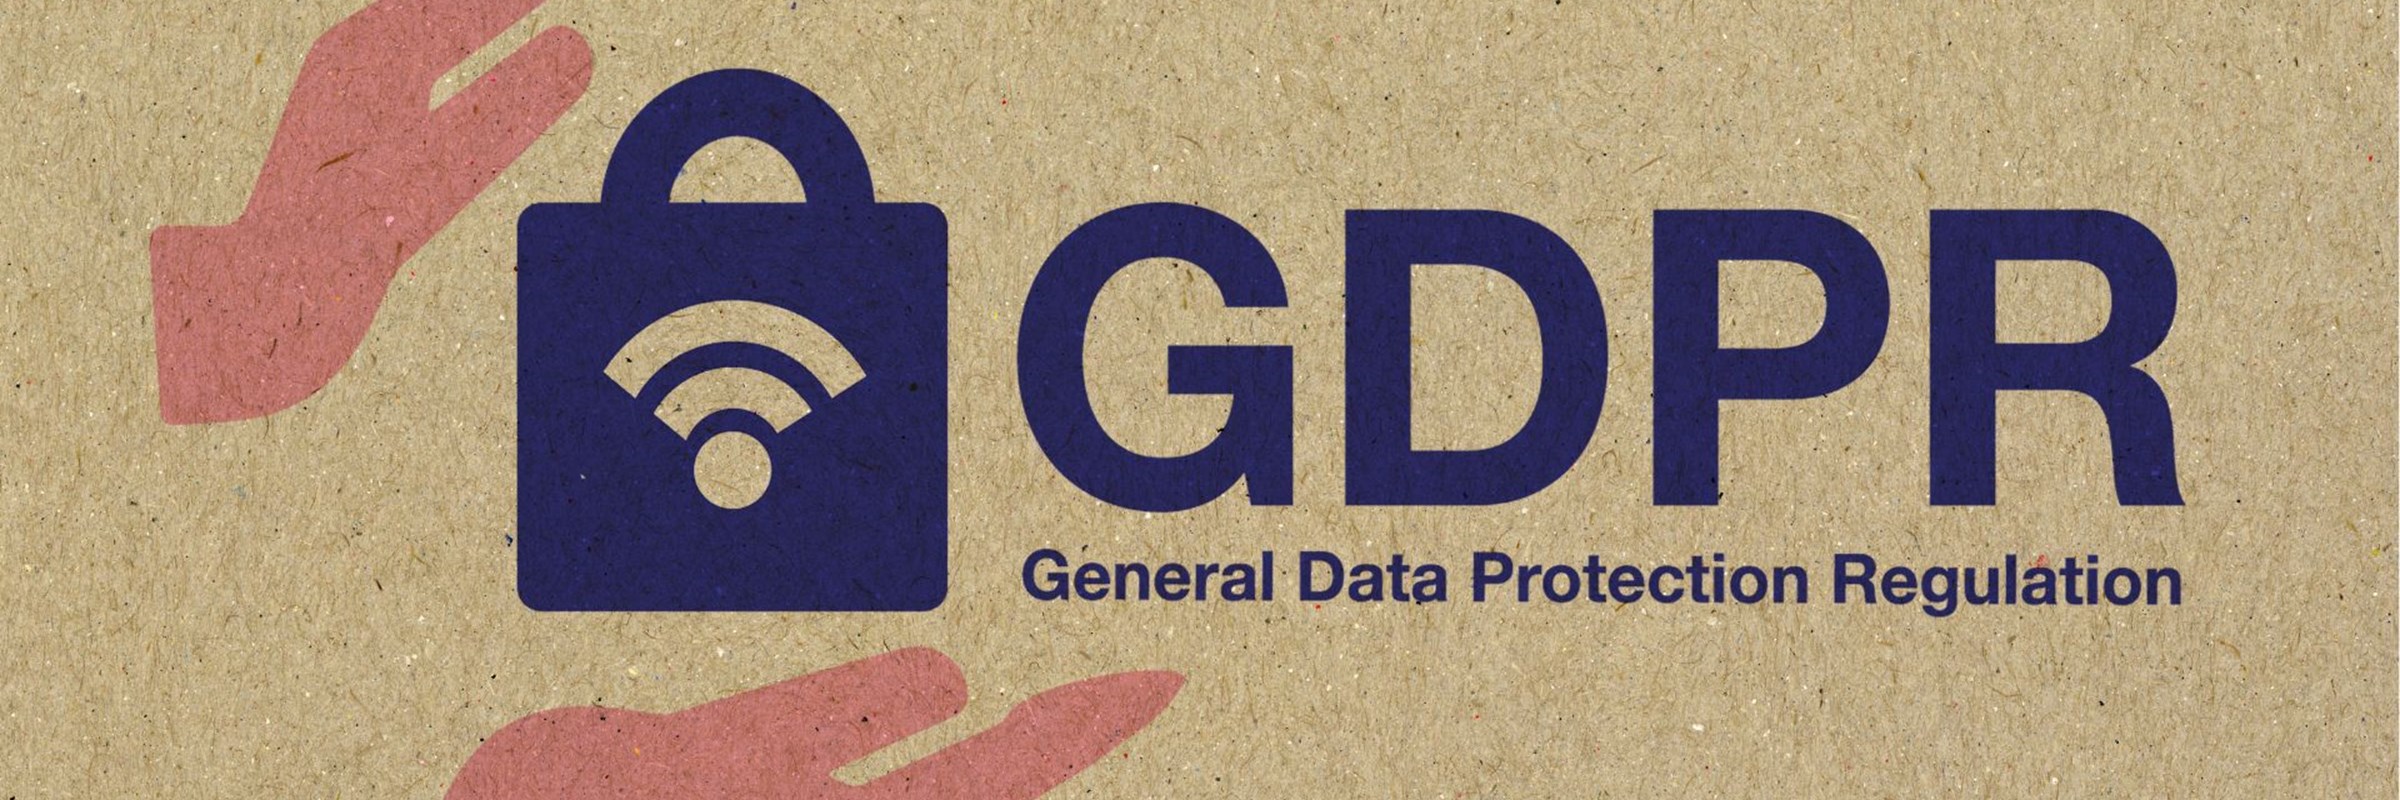 General data protection regulation (GDPR)